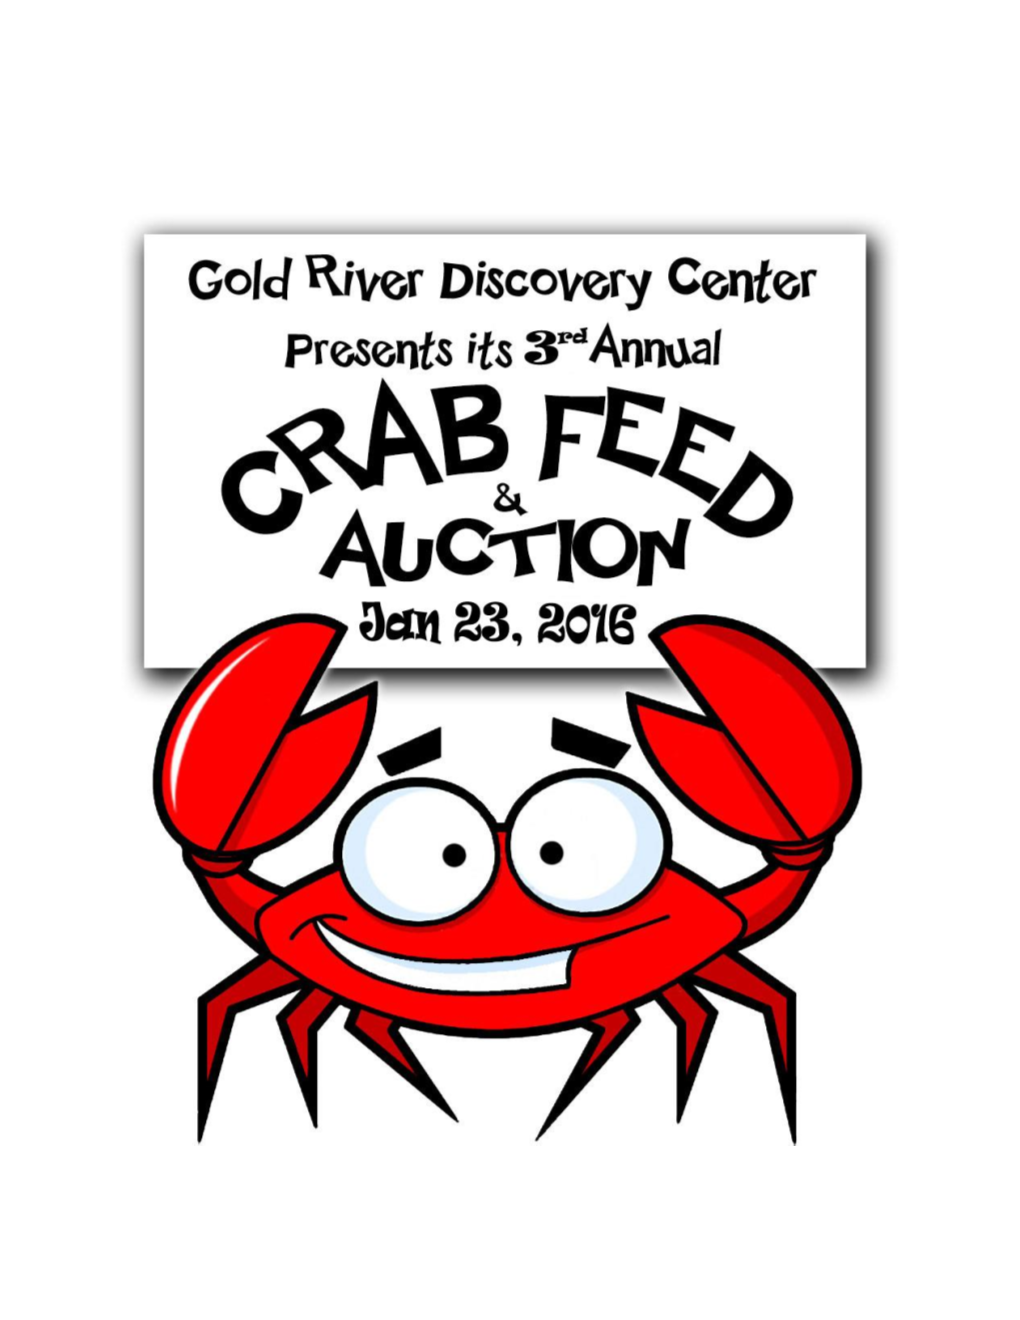 Crab Feed & Auction Evening Program